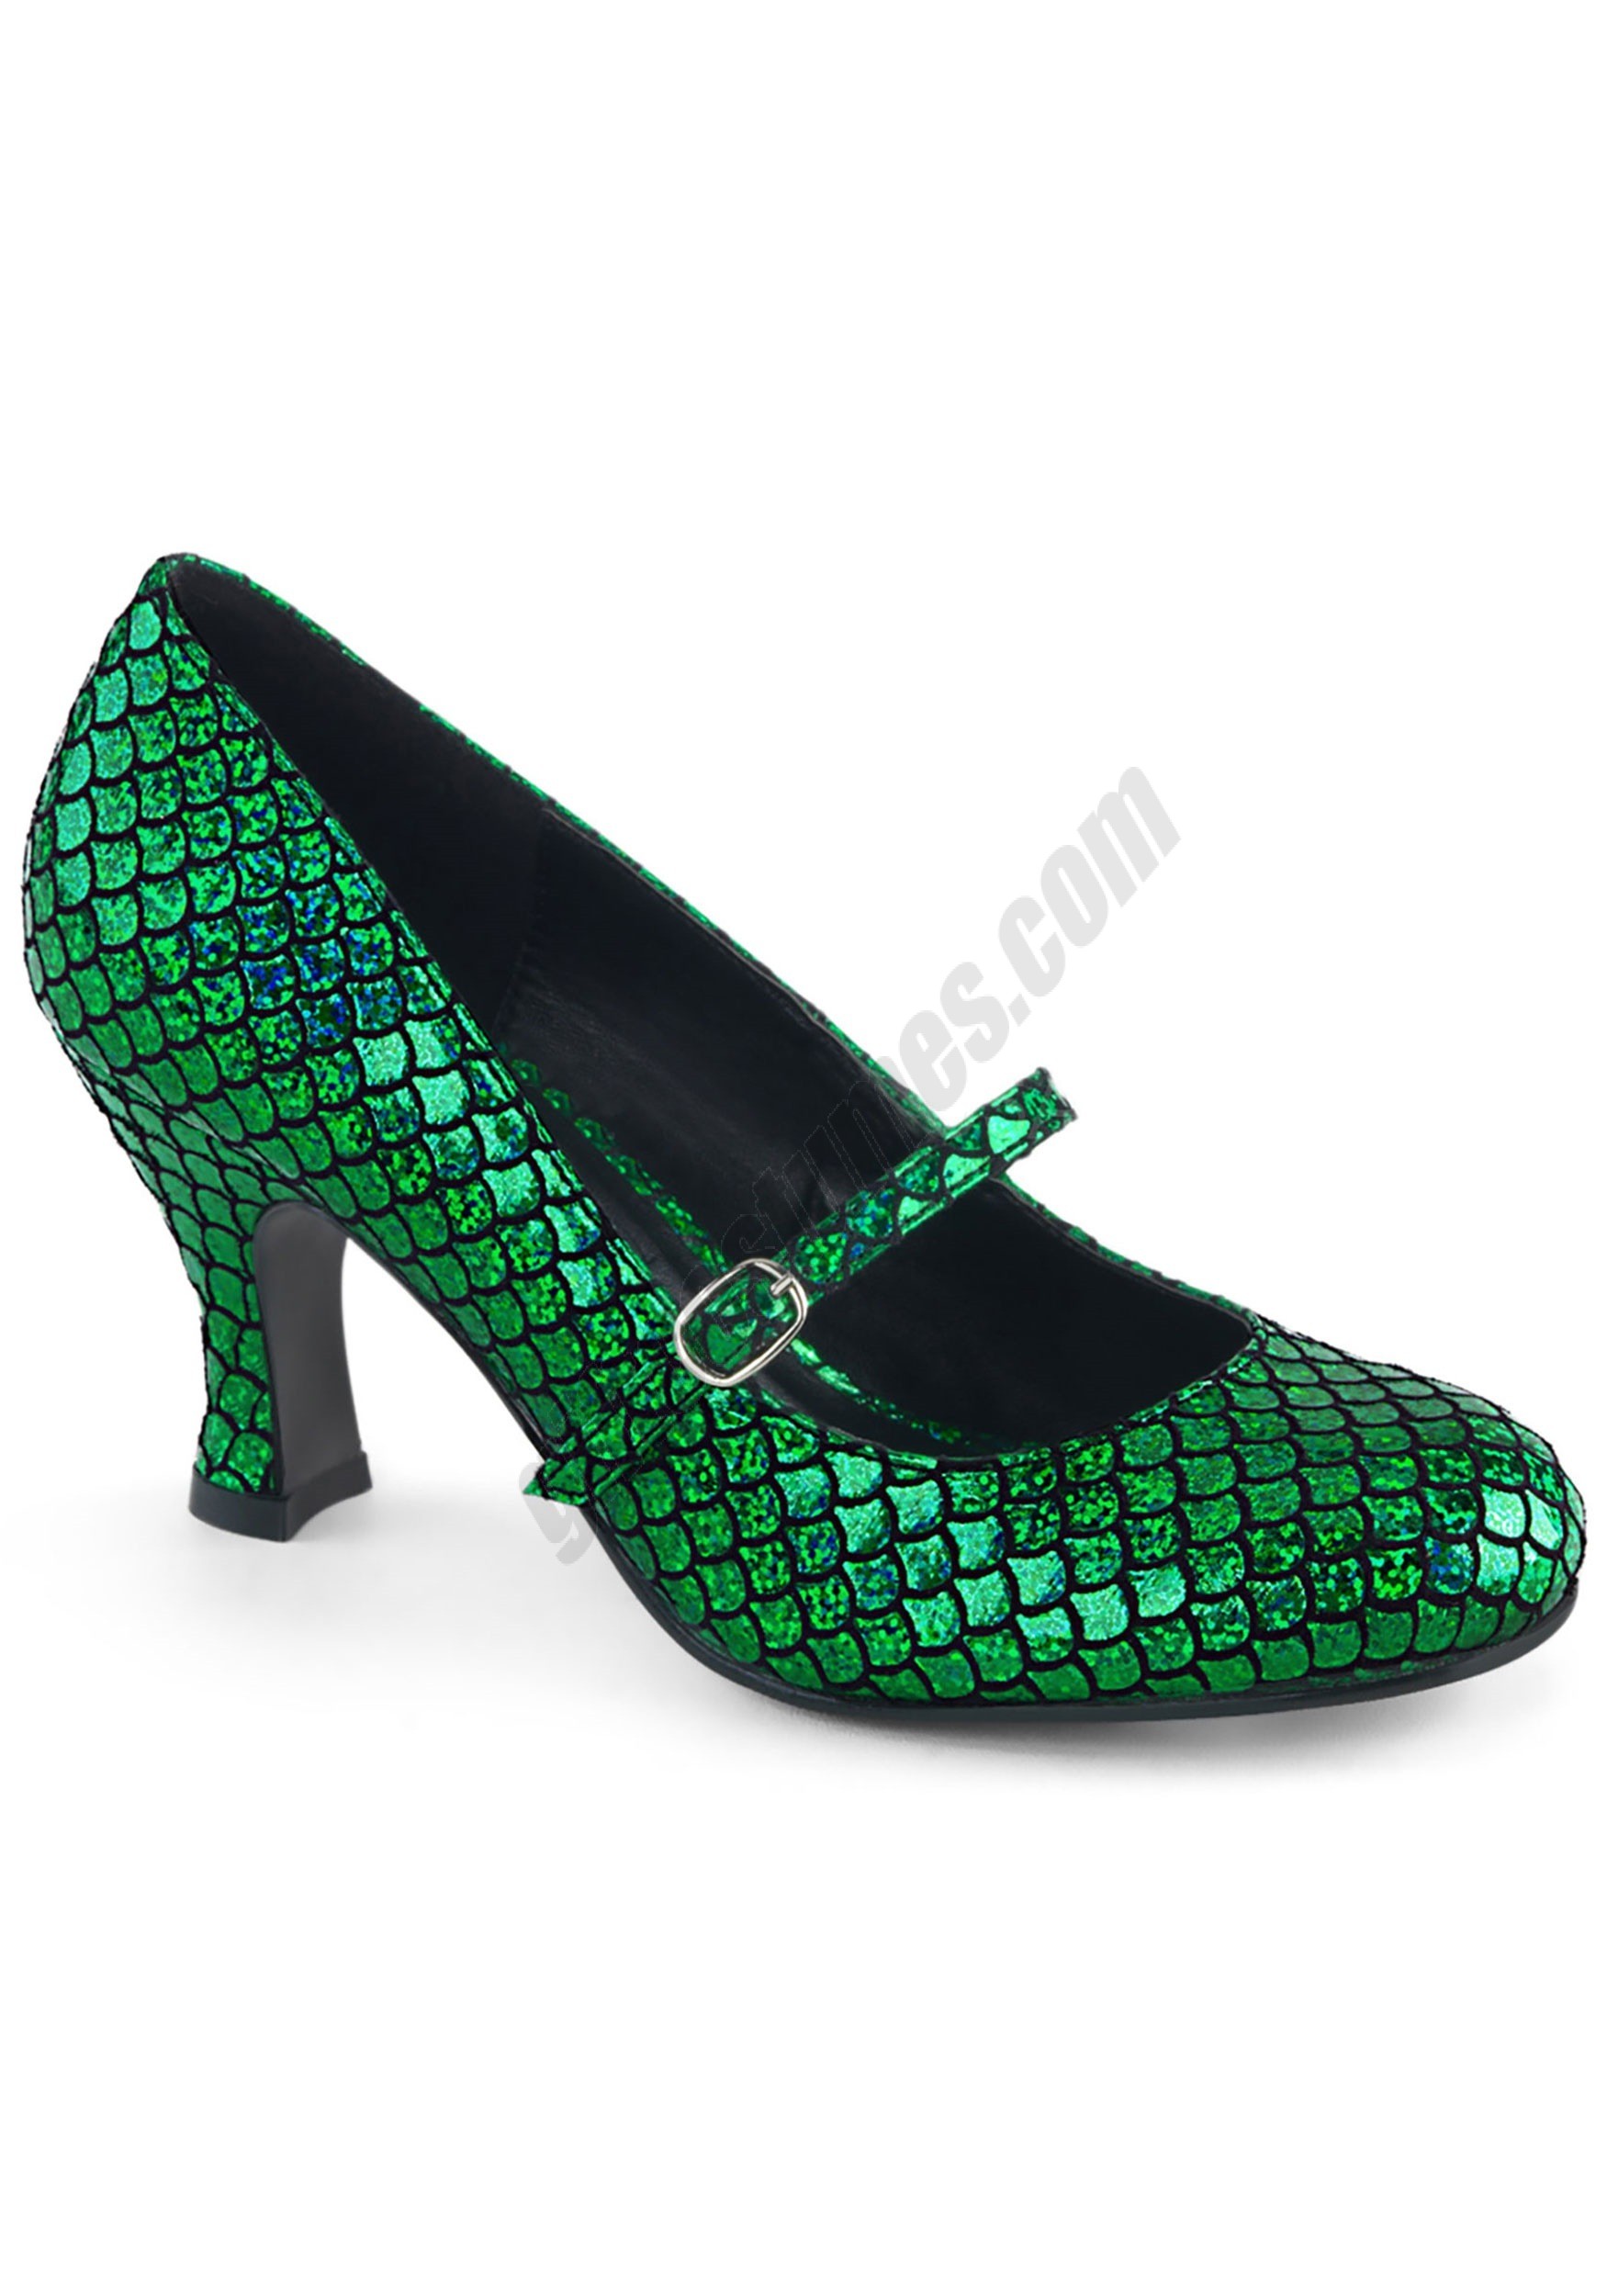 Green Mermaid Heels for Women Promotions - Green Mermaid Heels for Women Promotions